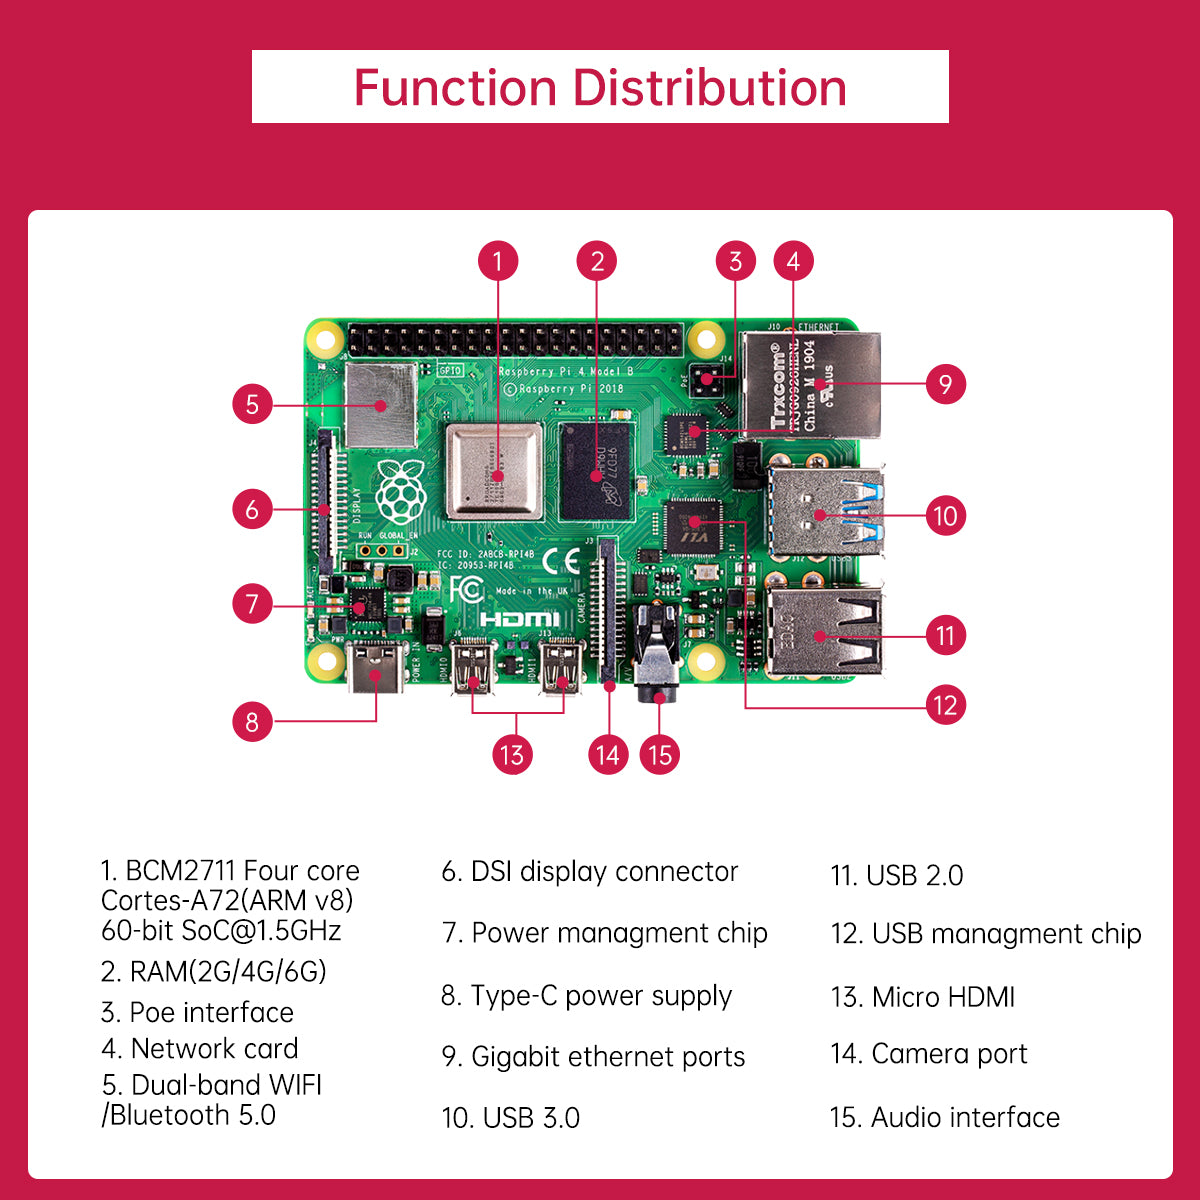 Raspberry Pi 4B 4G Board For Python Programming AI Vision Deep Learning Linux Development Board